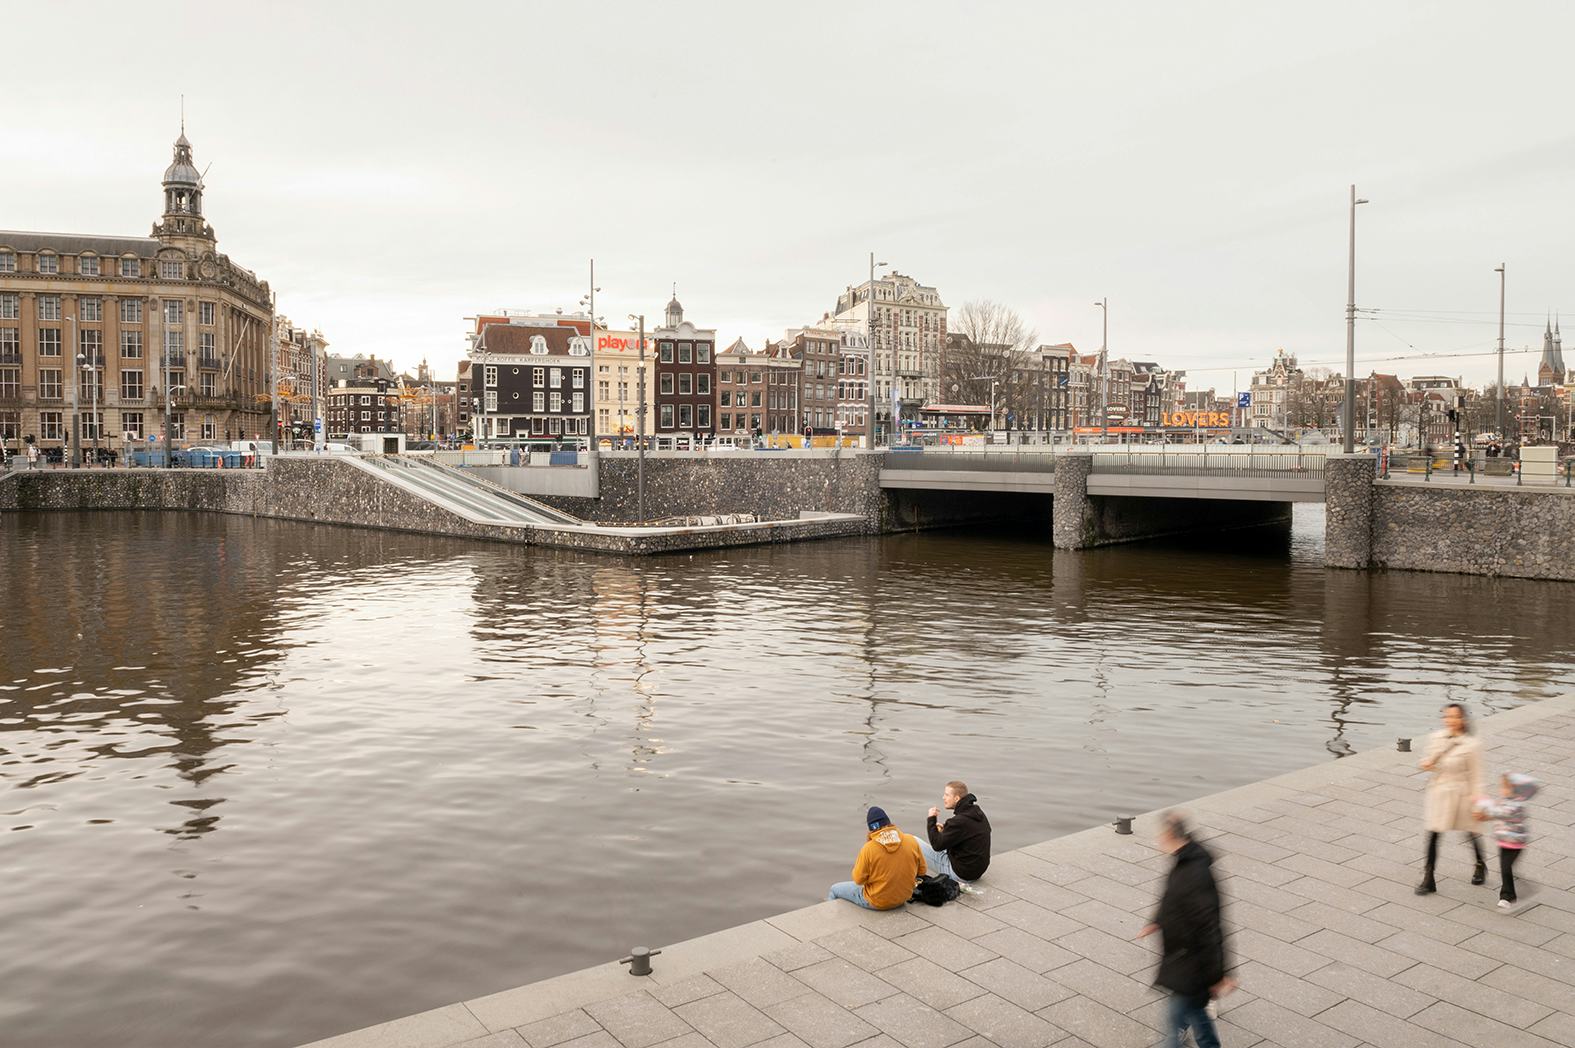 Orde in de chaos: fietsenstalling Amsterdam Centraal door wUrck